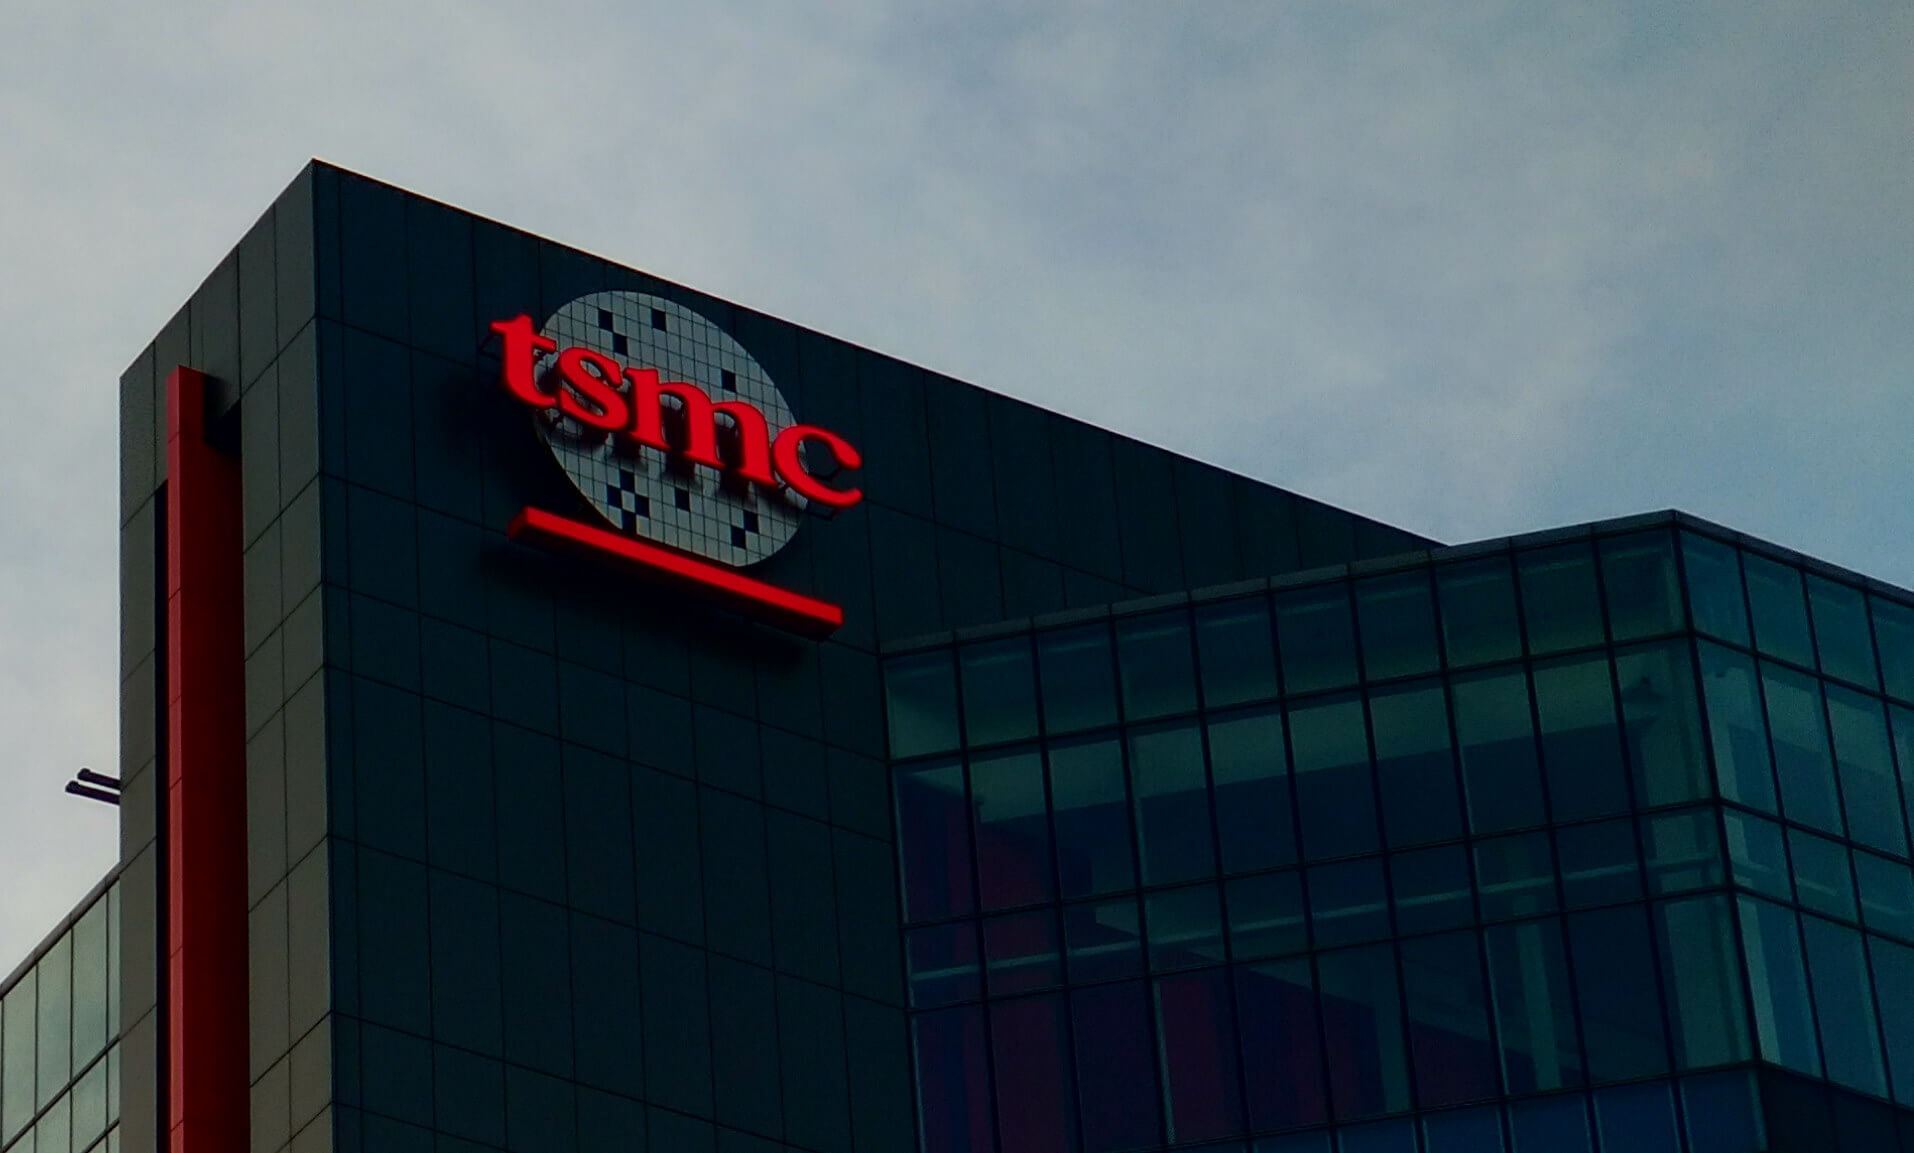 tsmc logo on building